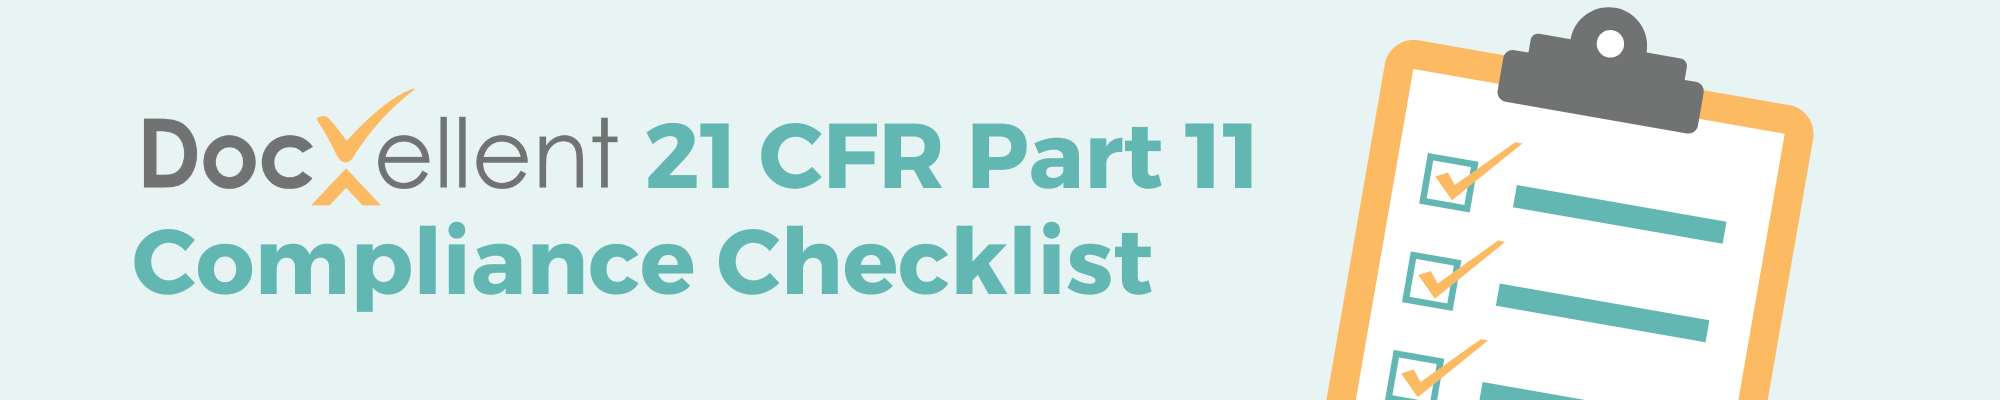 21 CFR Part 11 Compliance Checklist